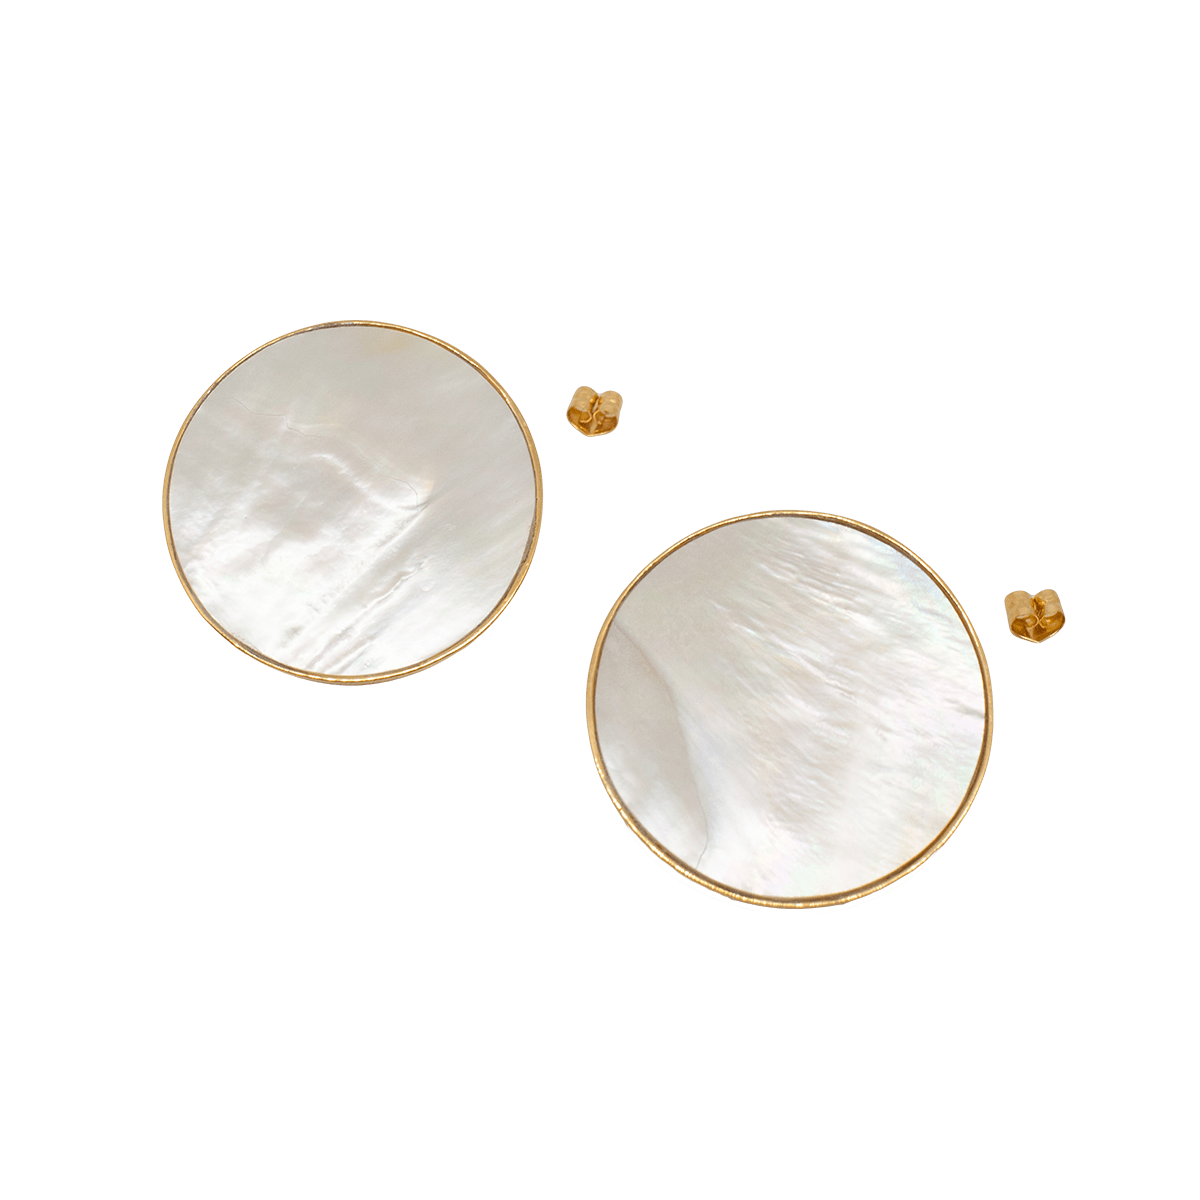 Penajewels Full Moon Earrings